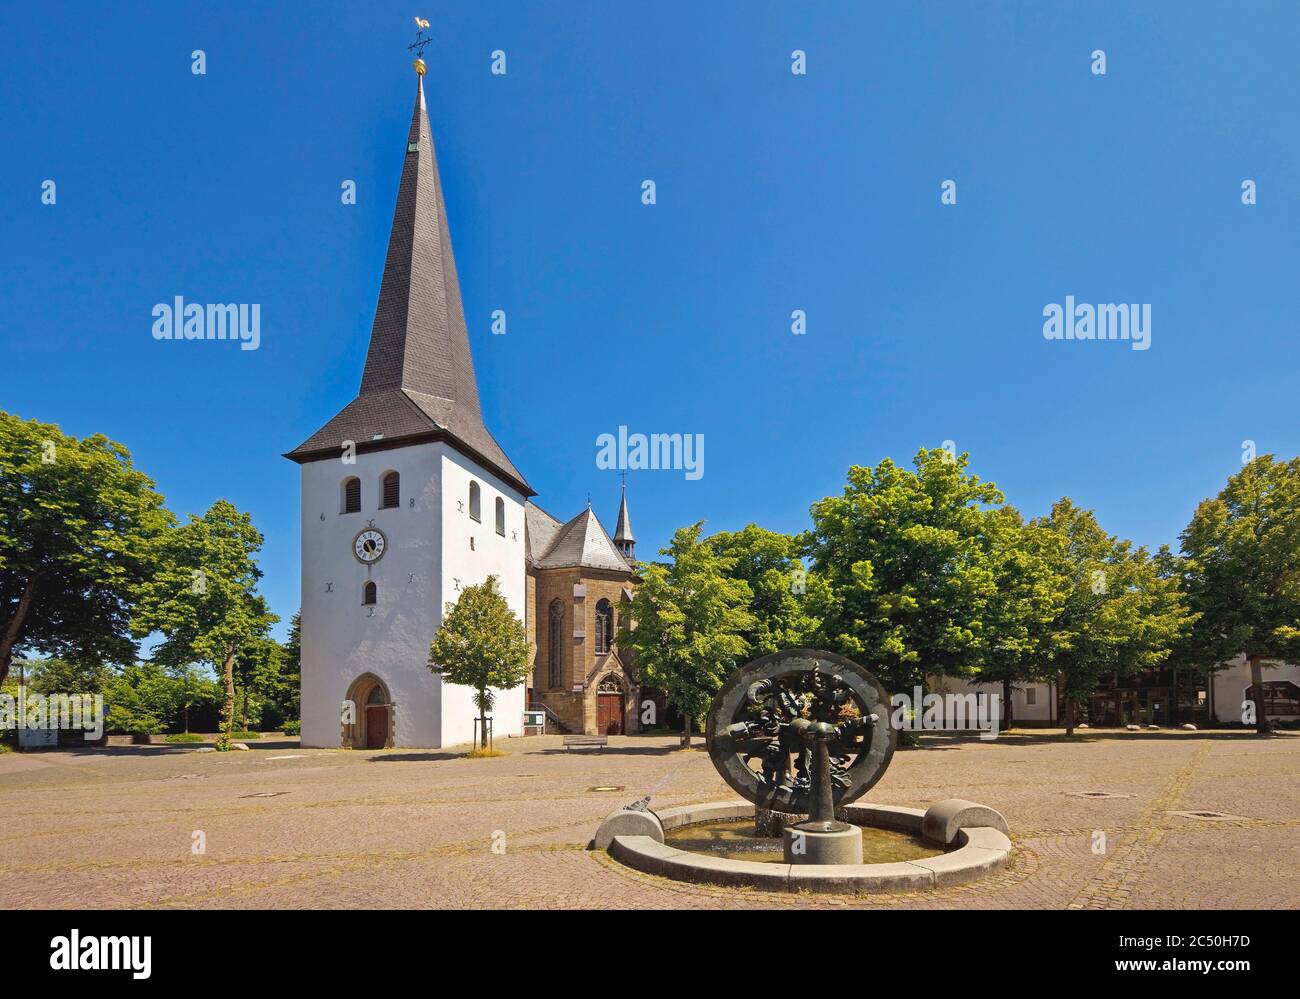 church square with St, Petri Church and market fountain in Huesten, Germany, North Rhine-Westphalia, Sauerland, Arnsberg Stock Photo